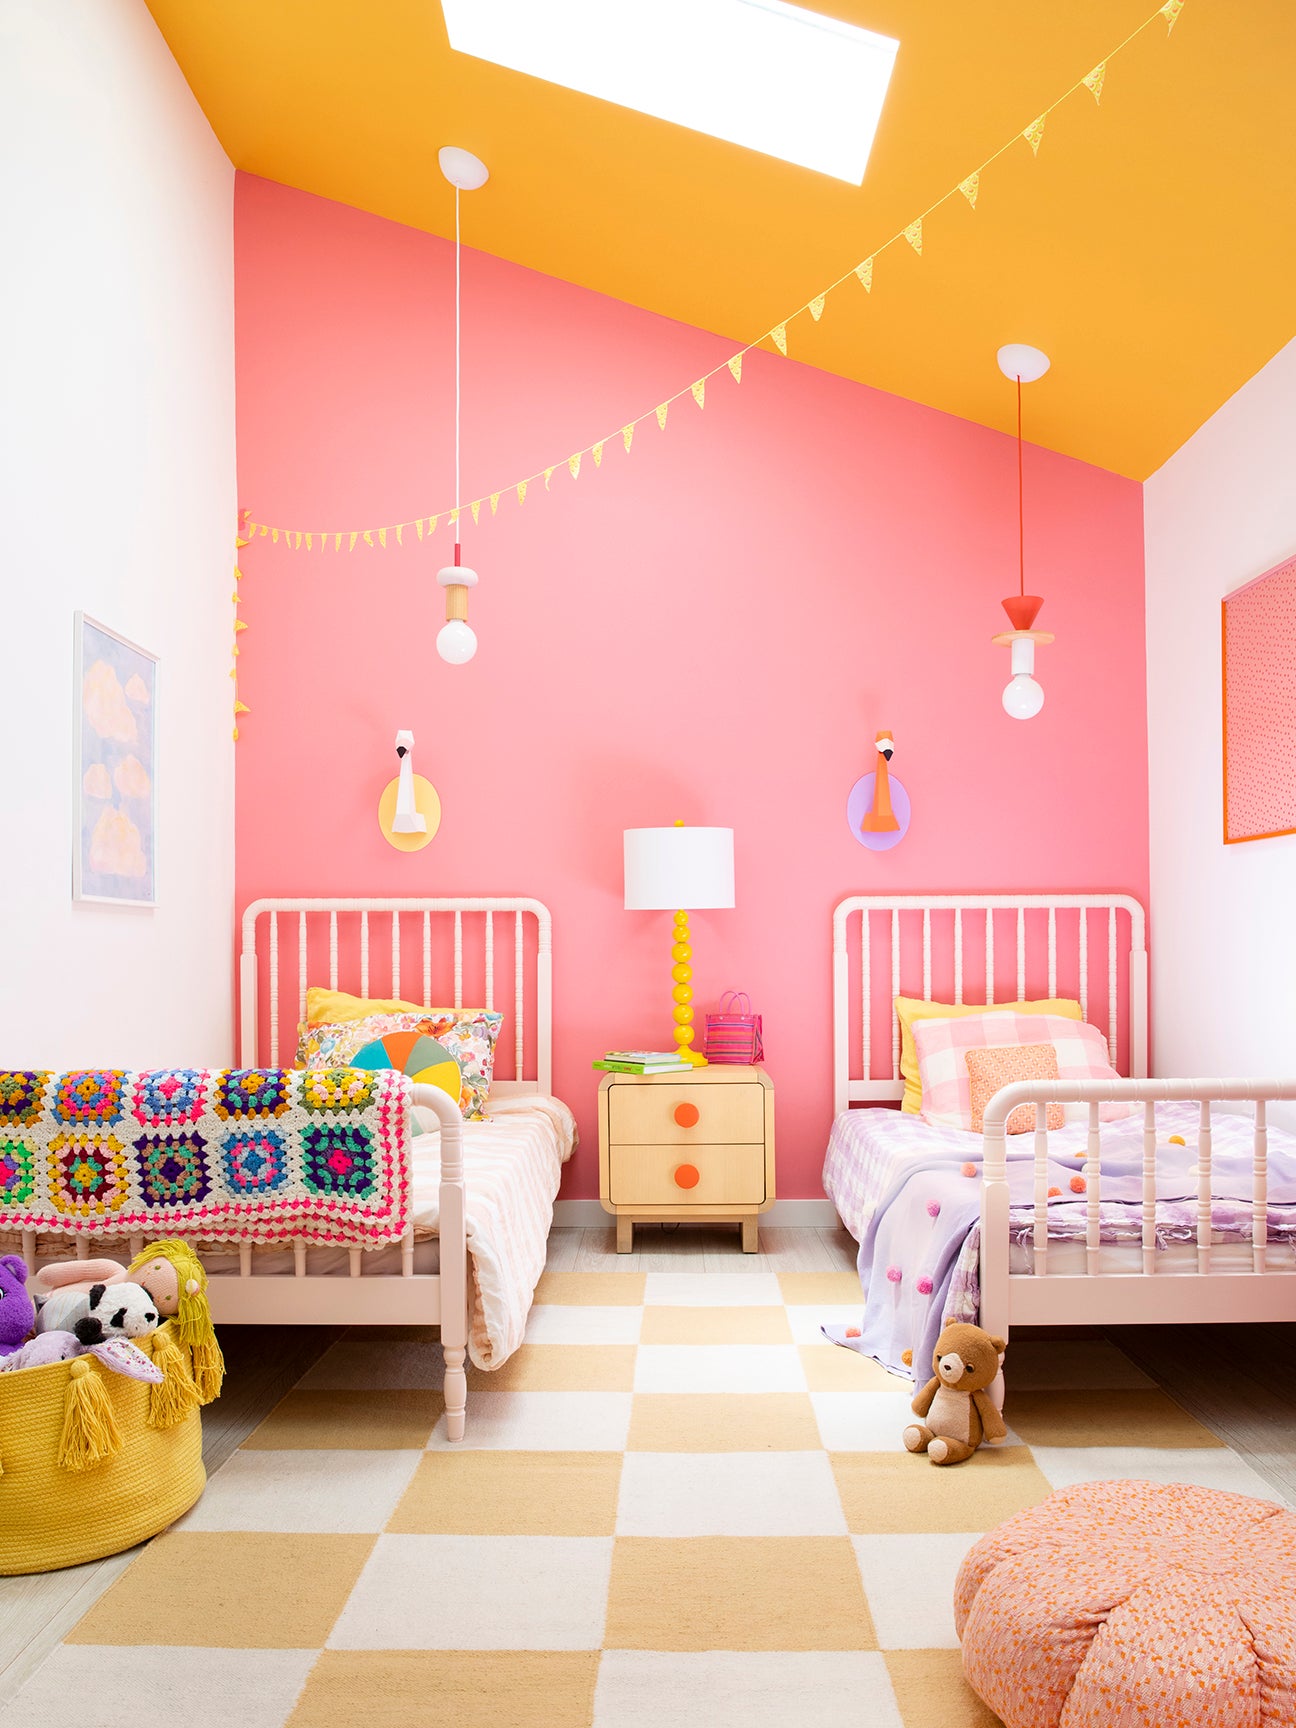 kidsâ room with pink statement wall and orange ceiling